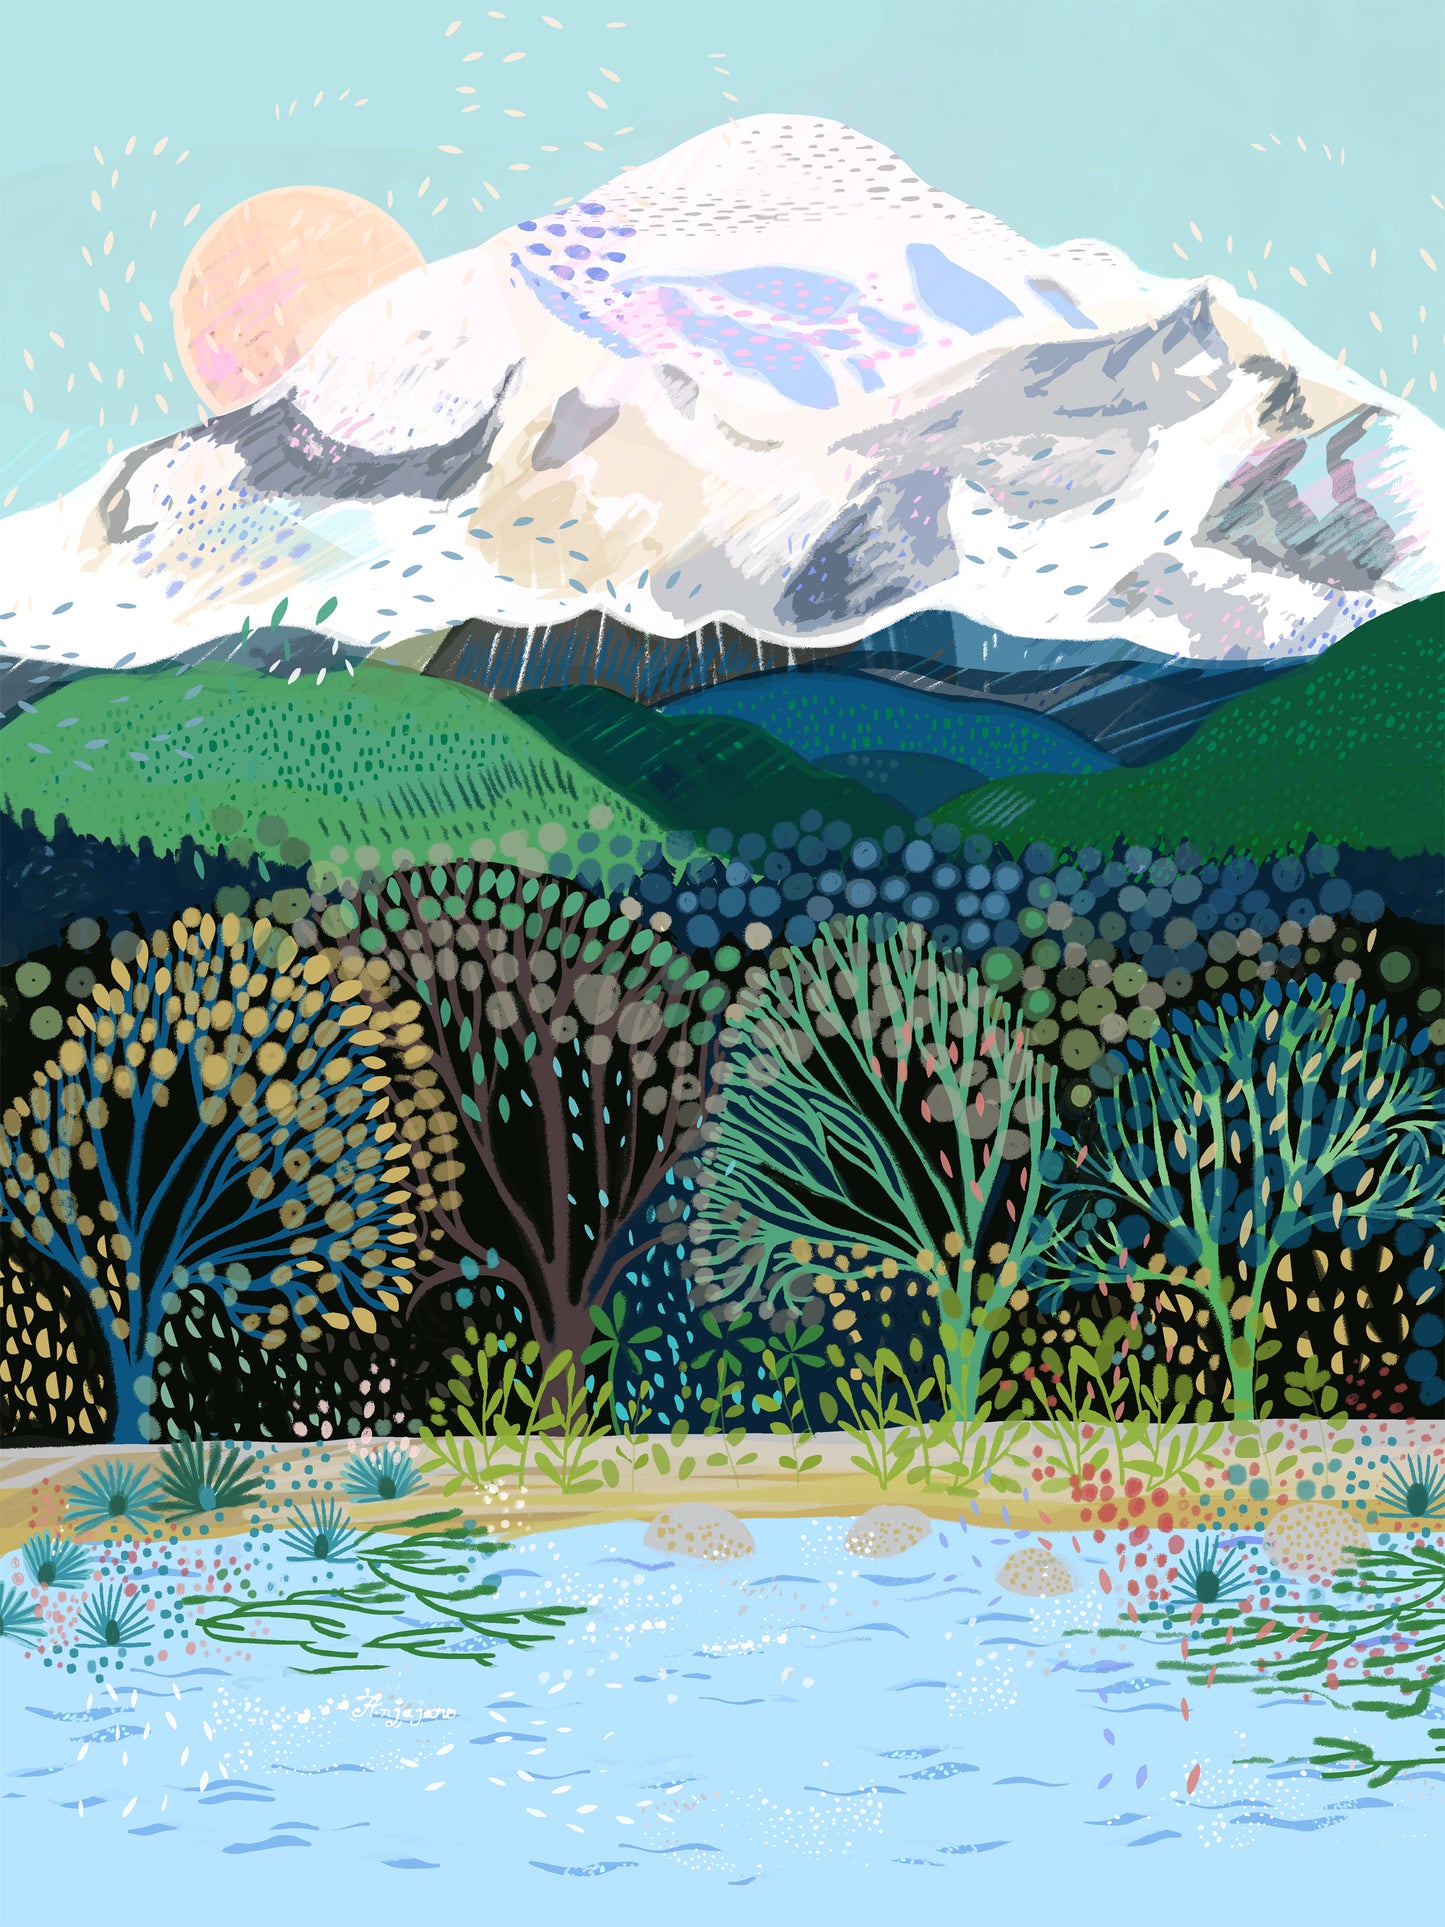 Mountain Ranges No. 2 Art Print Set